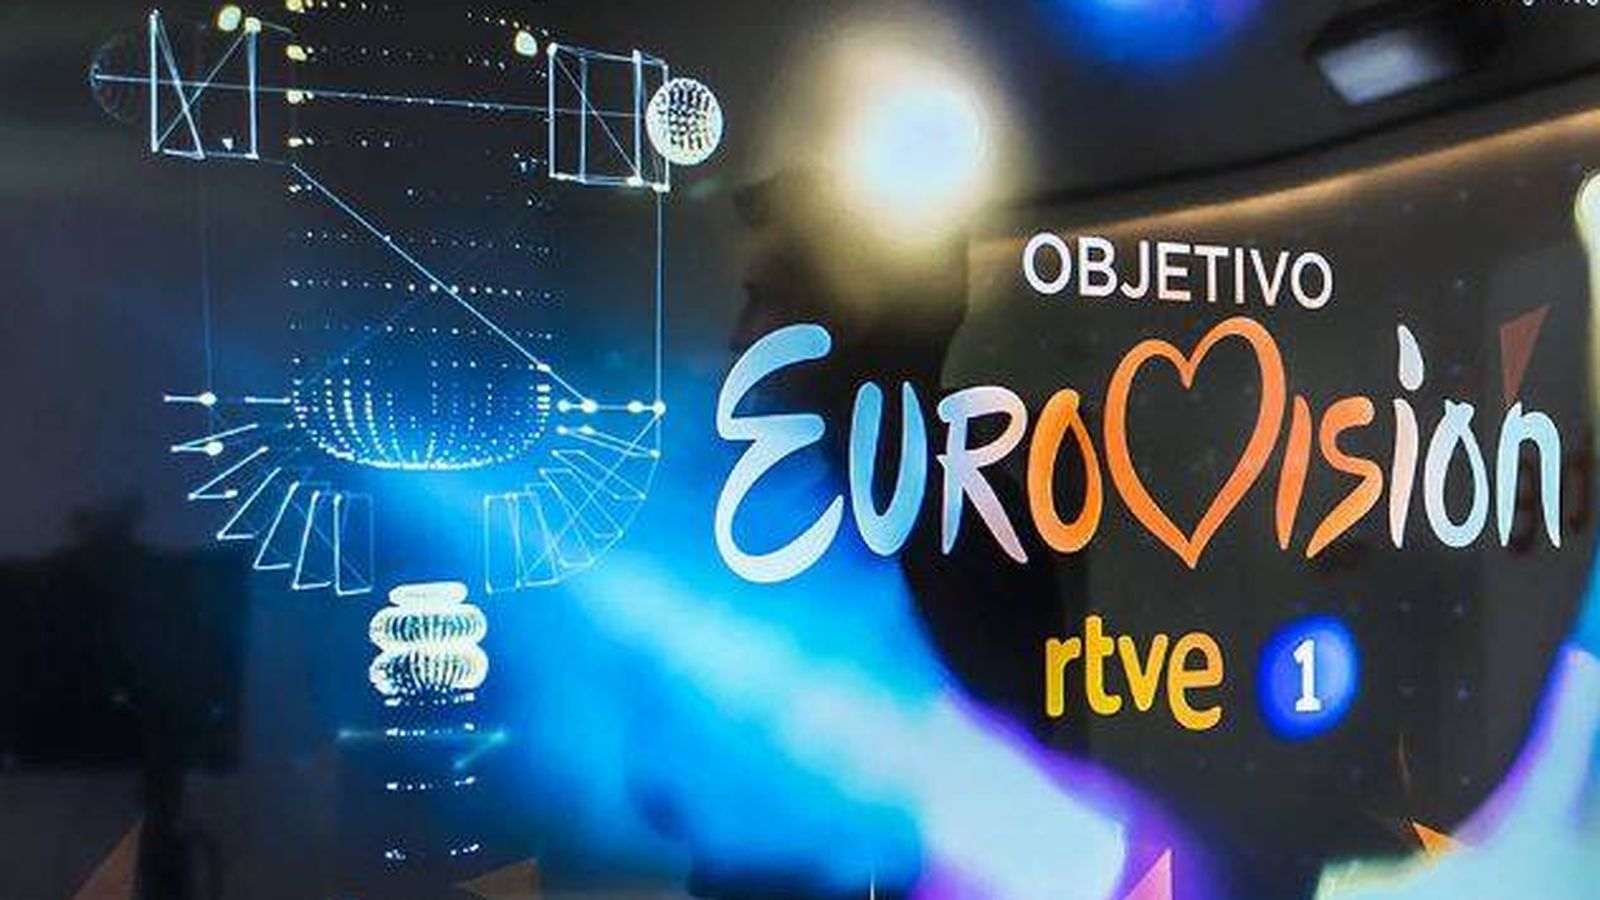 Foto: Objetivo Eurovisión 2017